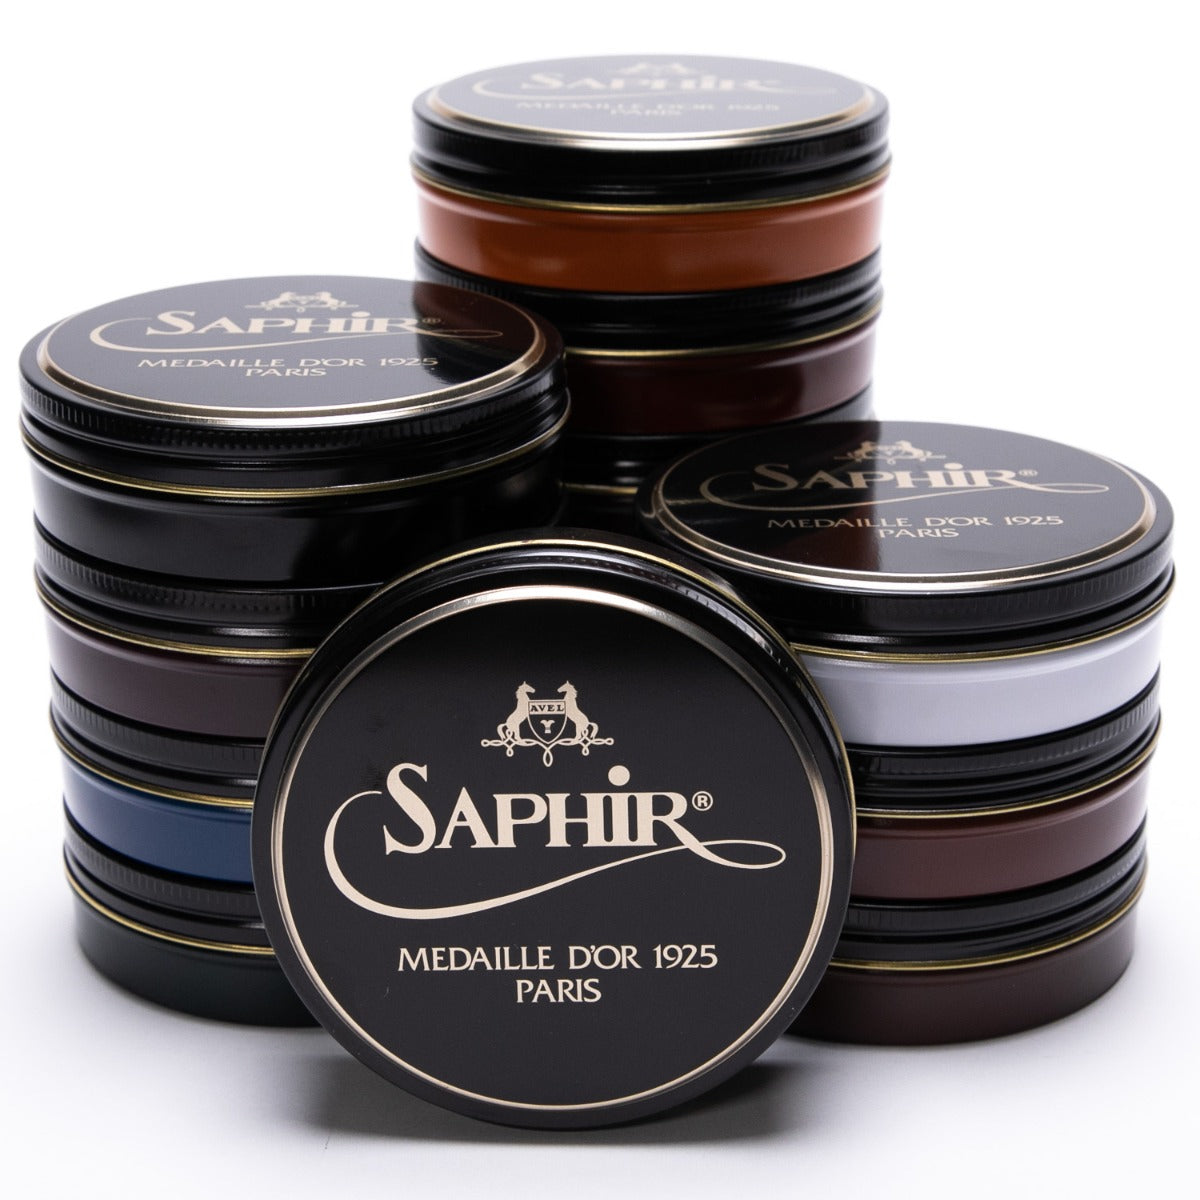 Saphir Beaute Du Cuir Product's – Saphir India